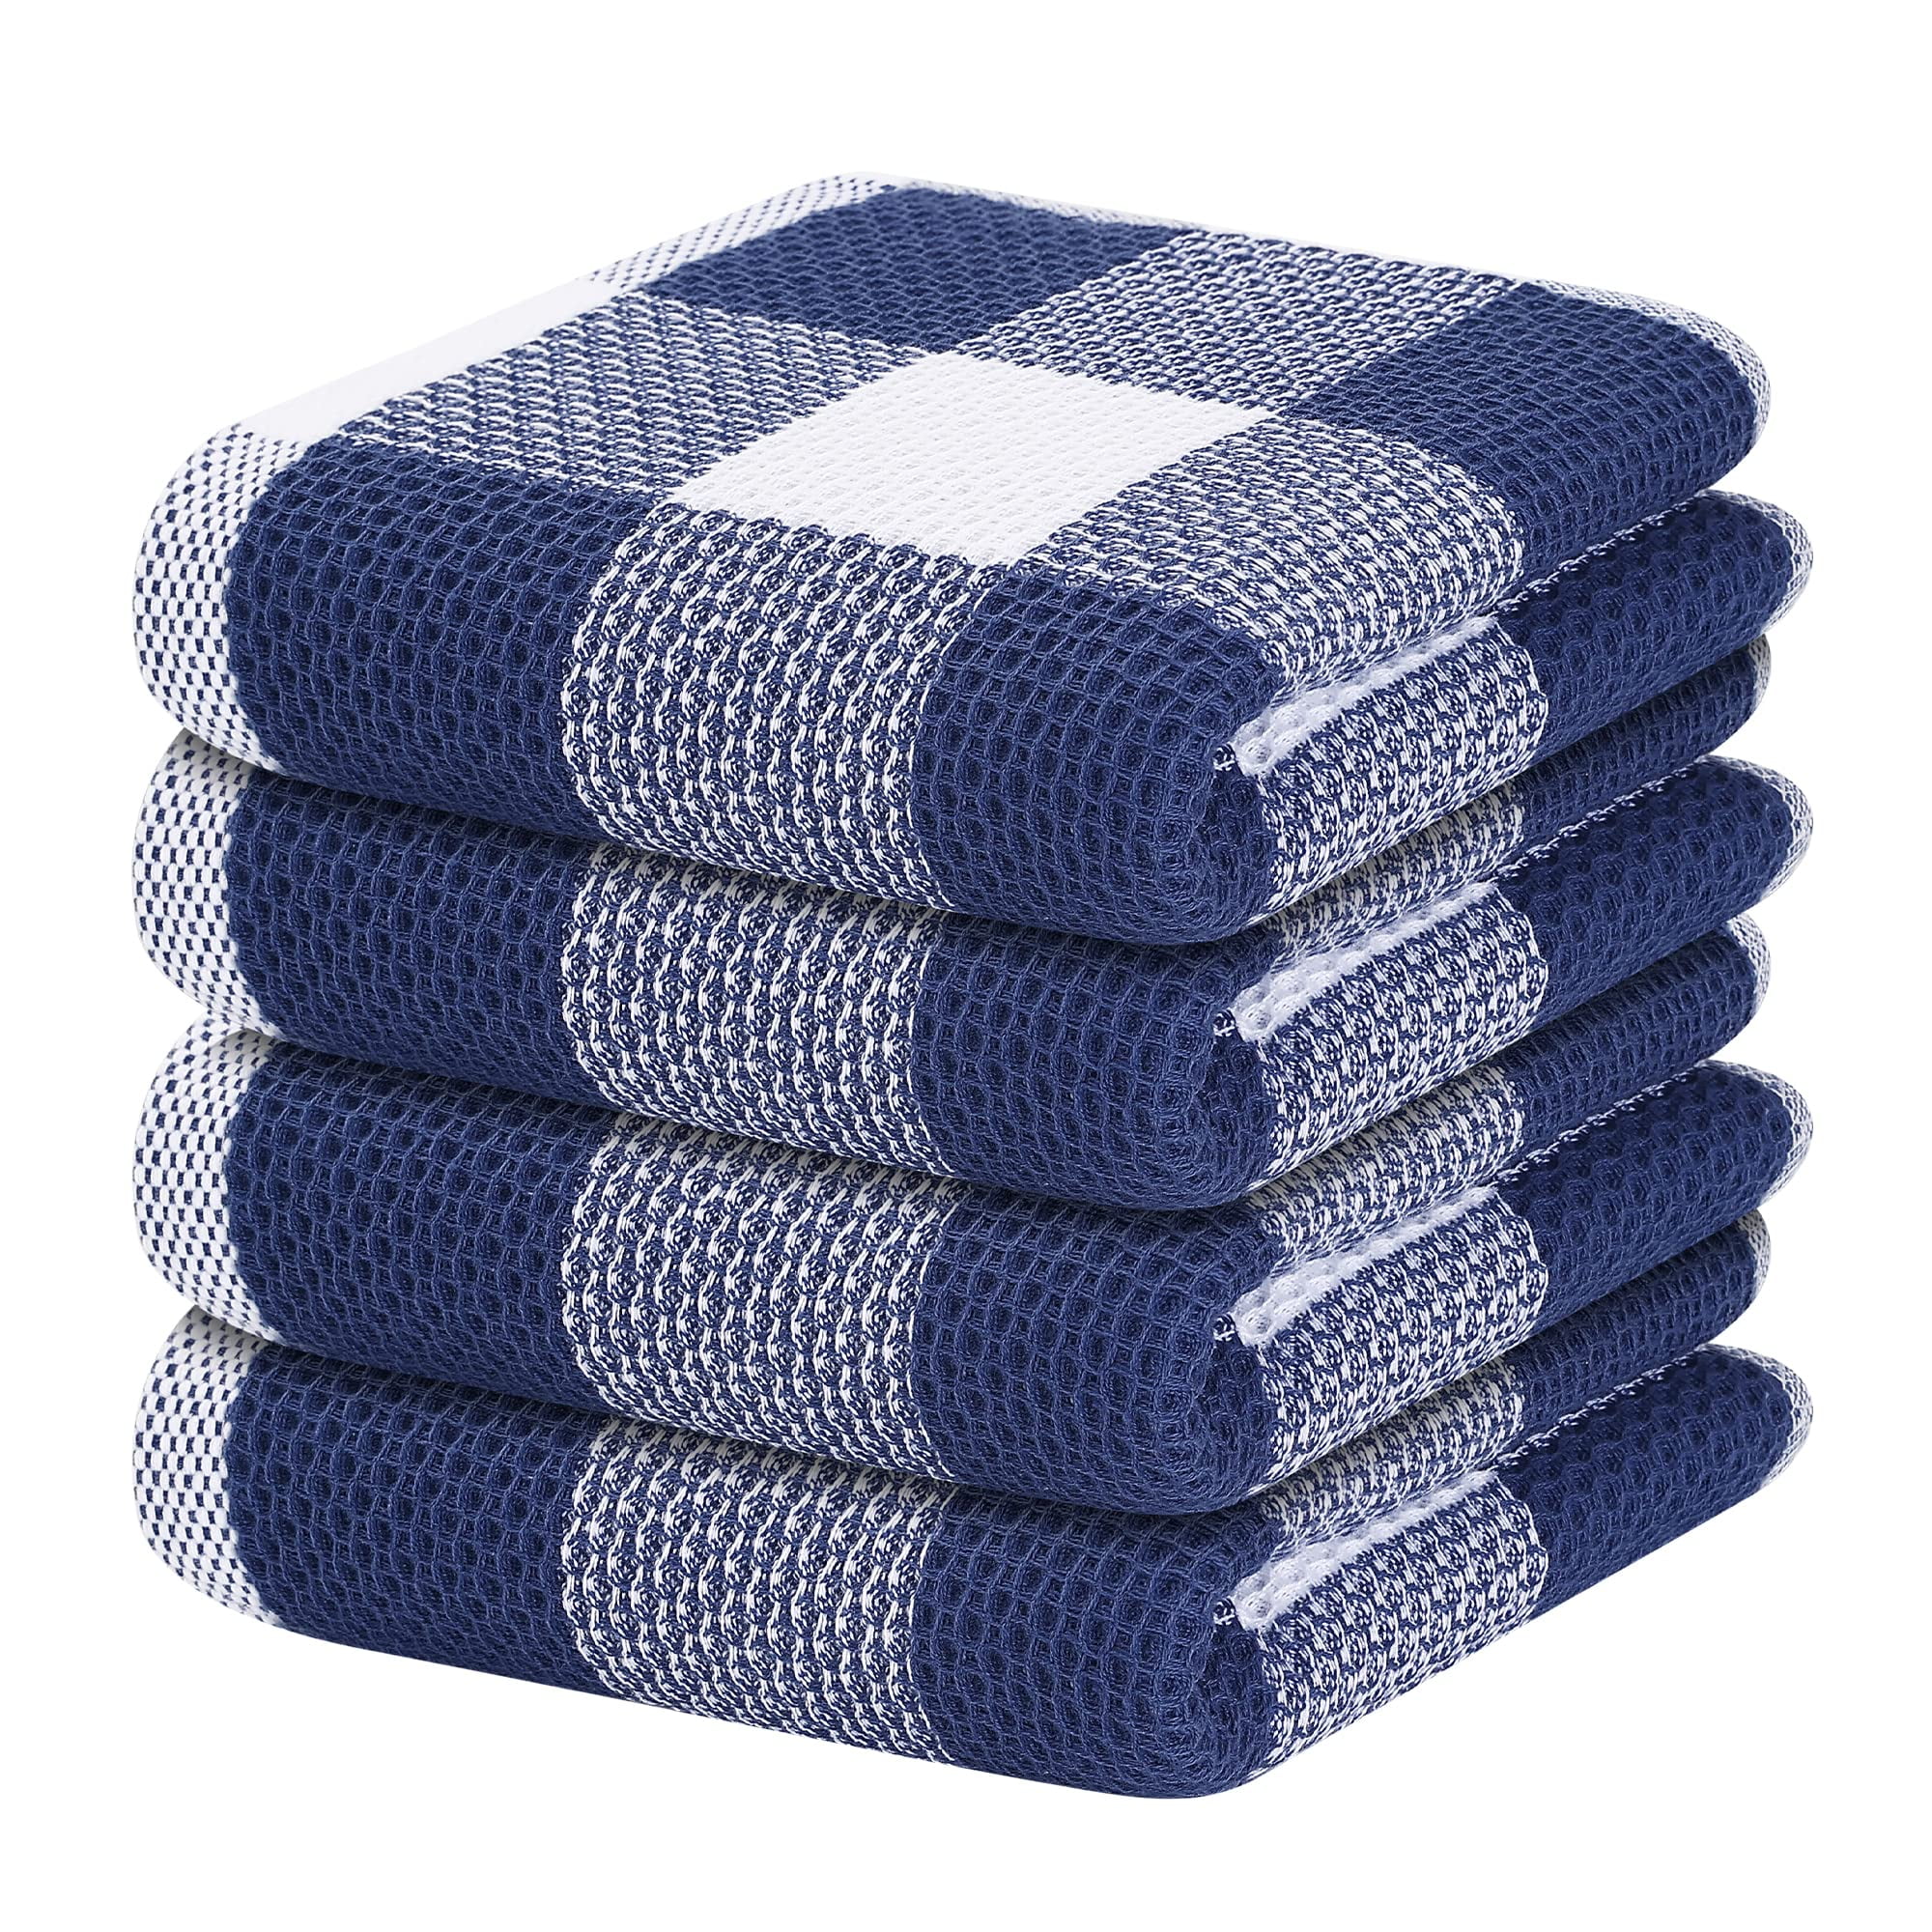 Buffalo Plaid Dish Towels - Navy Kitchen Towels - Checkered Tea Towel -  Navy Dish Towels - Grain Sack Dish Towels Plaid - Navy Blue Cotton Dish